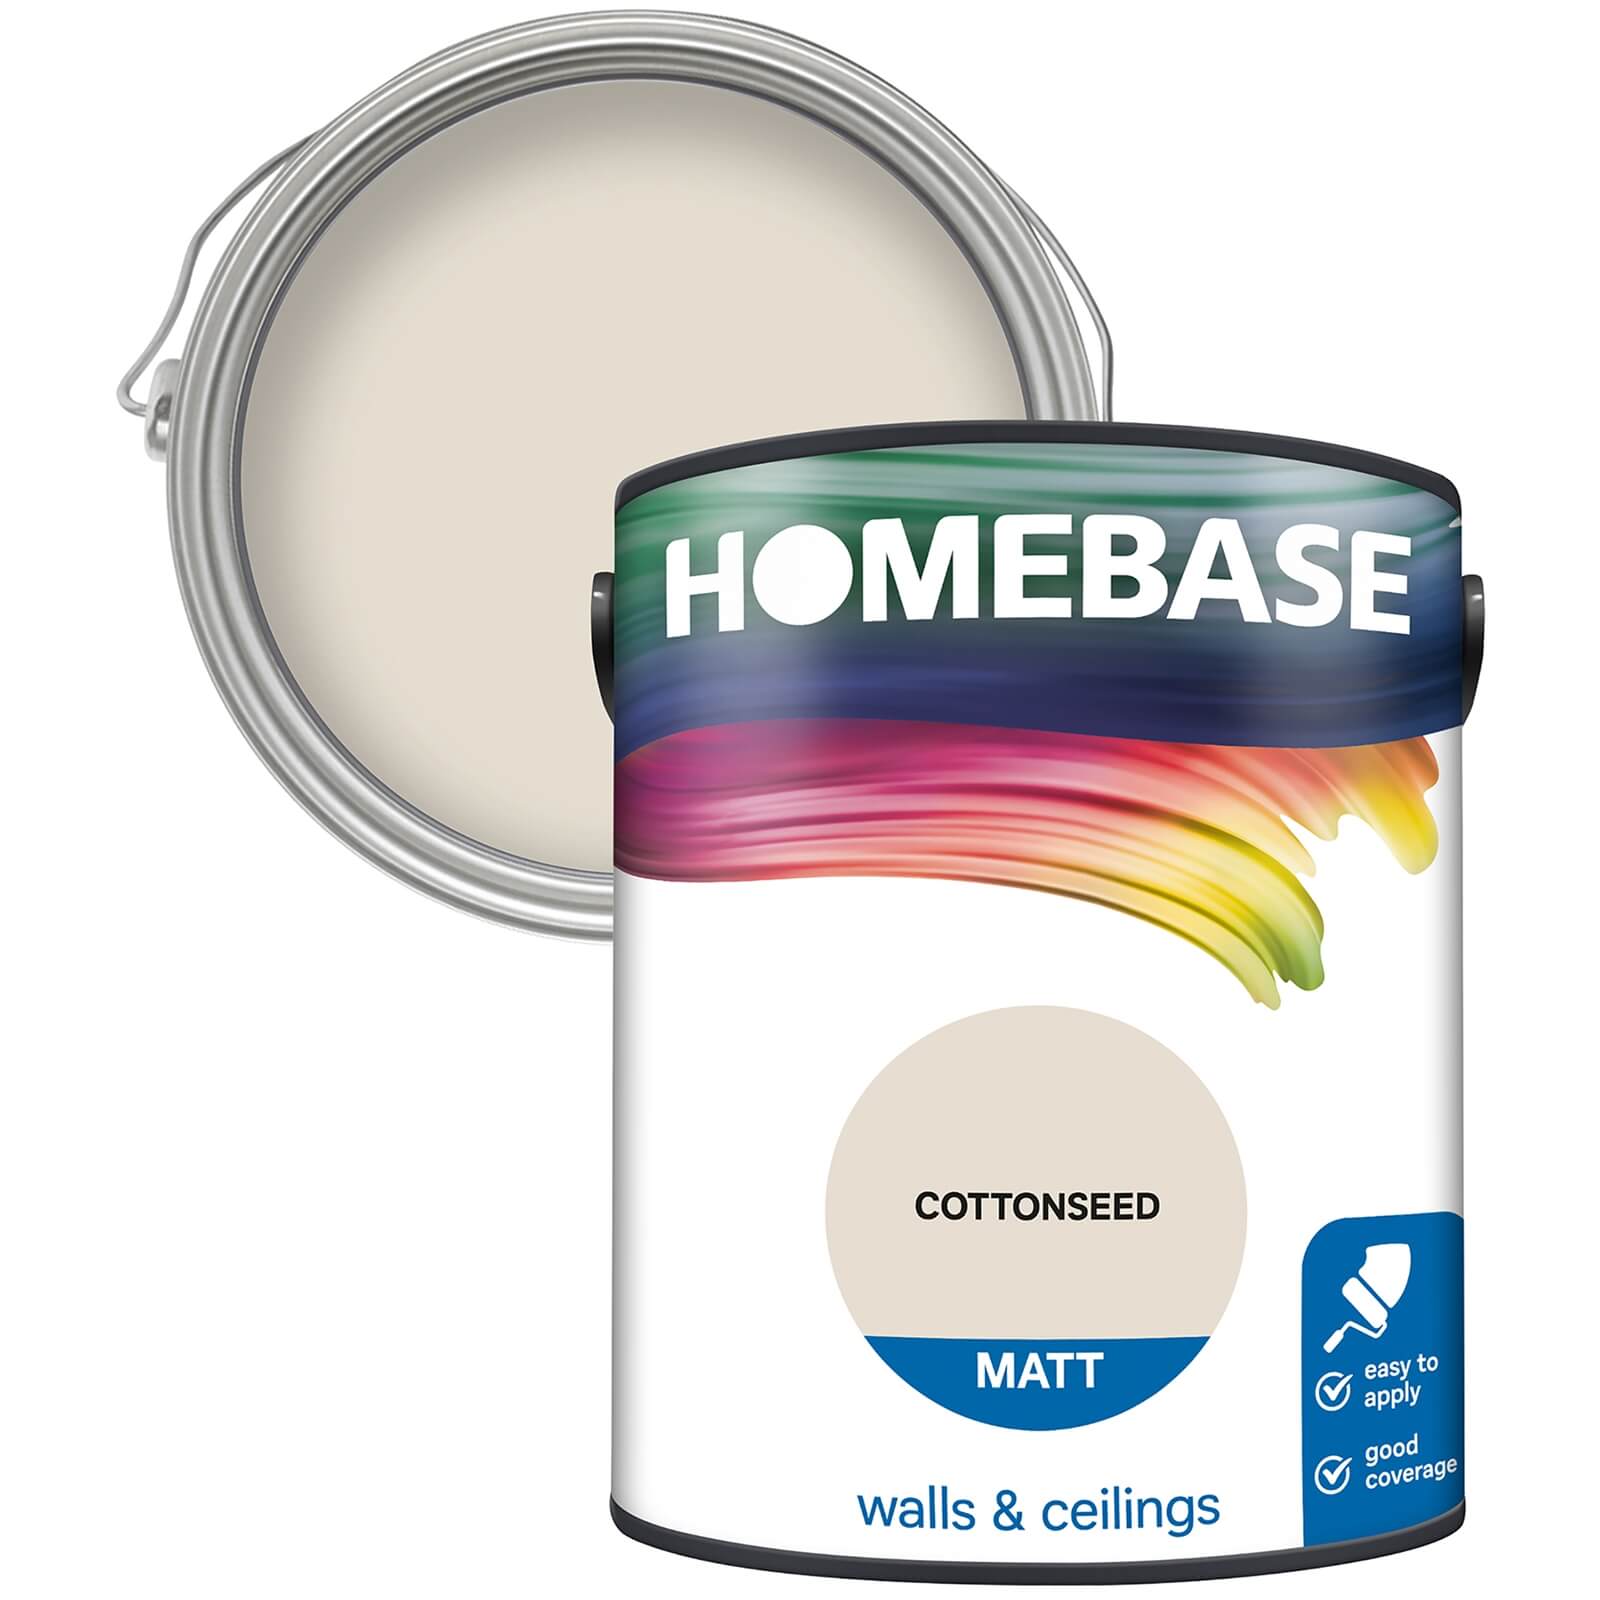 Homebase Matt Emulsion Paint Cottonseed - 5L